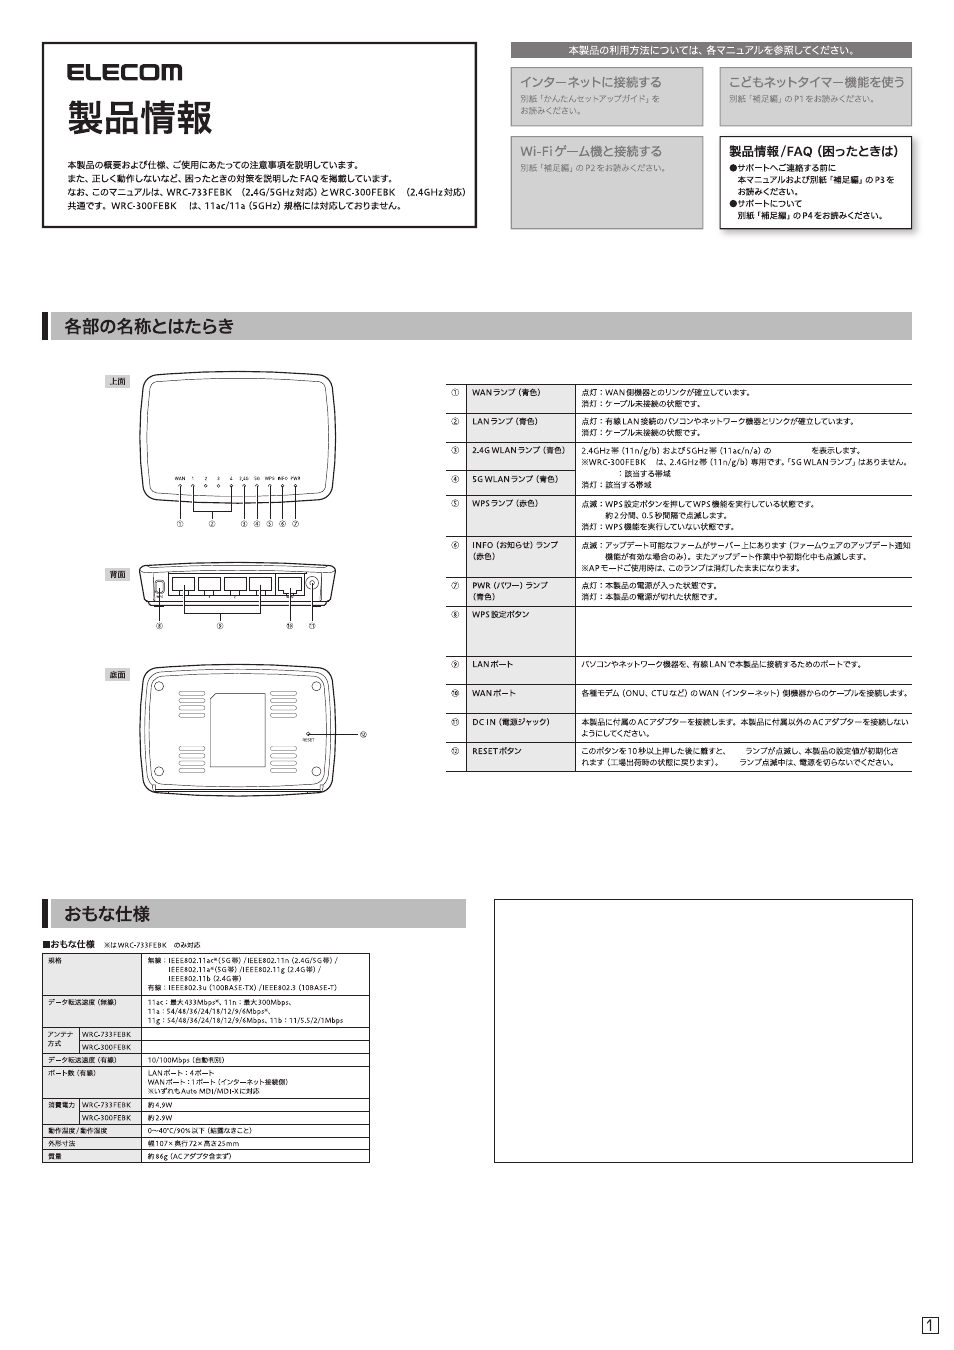 Elecom WRC-300FEBK-A 1.製品情報 User Manual | 2 pages